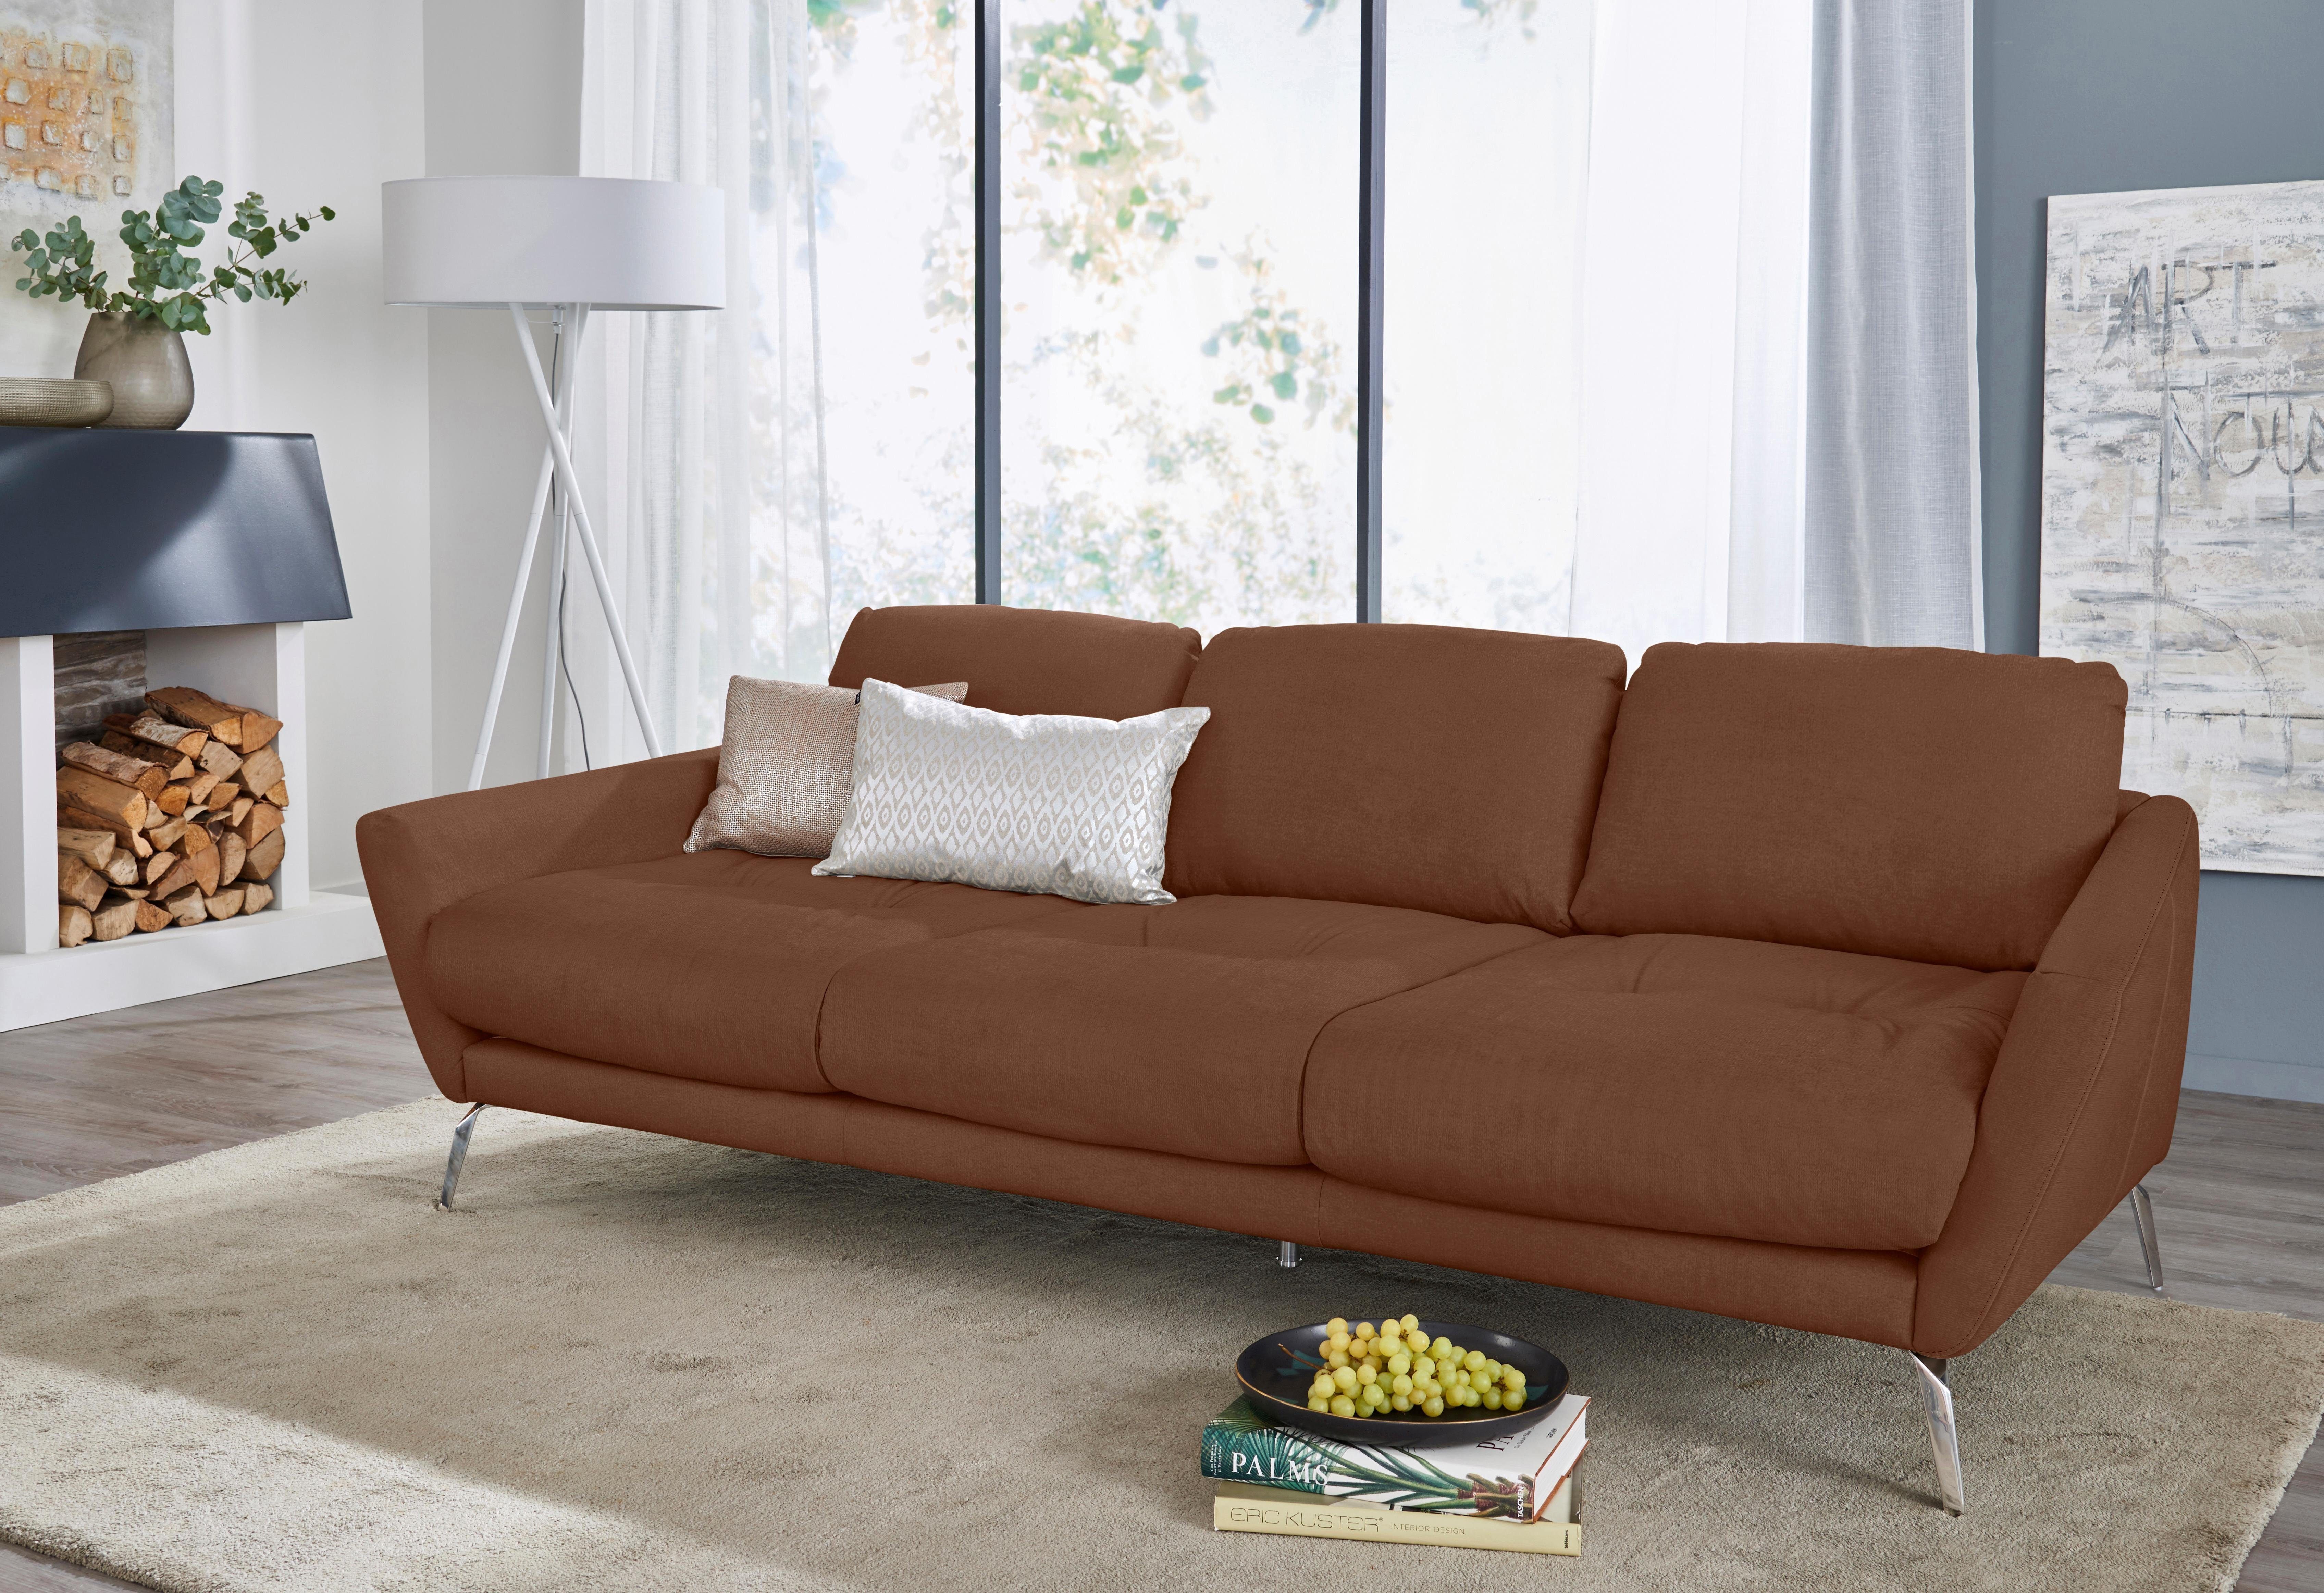 W.SCHILLIG Big-Sofa softy, mit Heftung Sitz, im Chrom glänzend Füße dekorativer